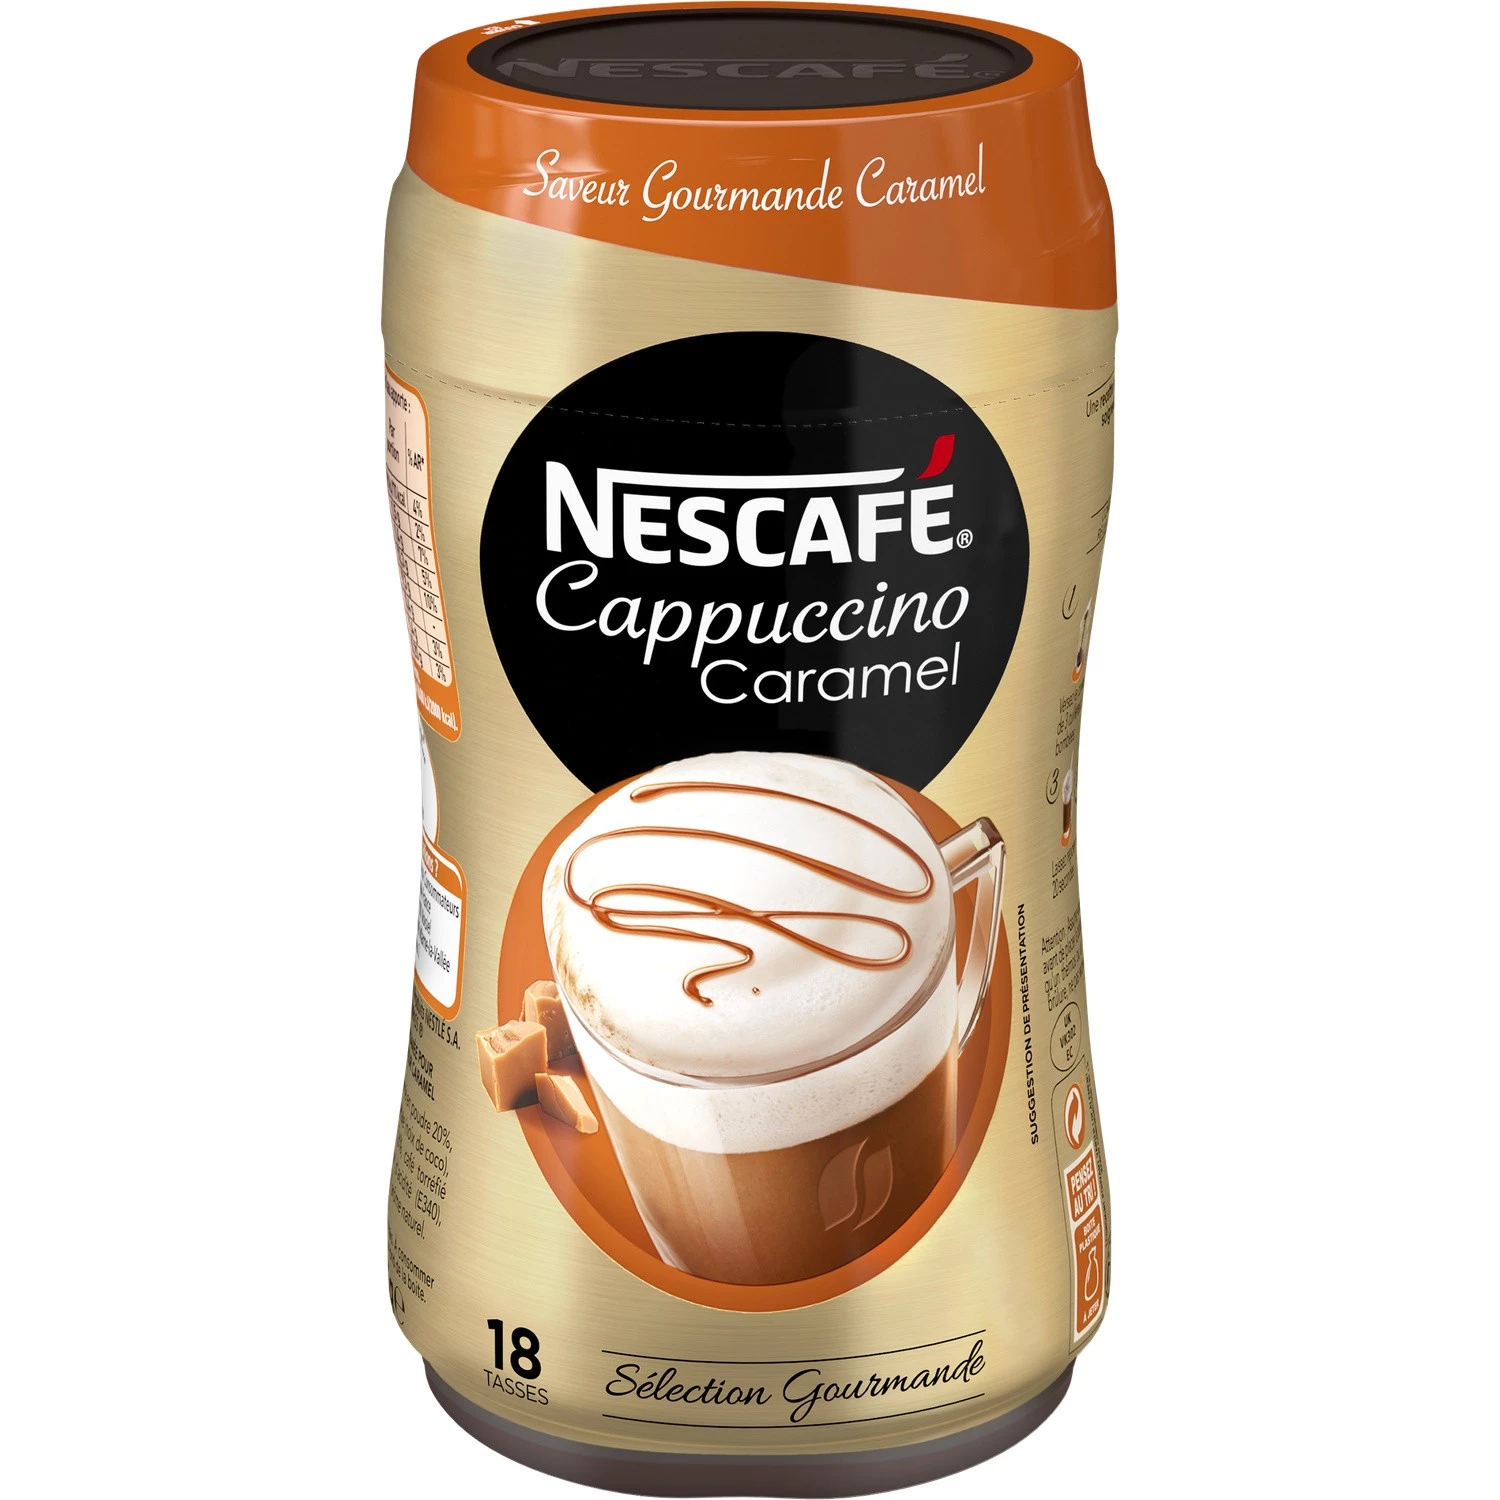 Cappuccino lösliches Karamell 306g - NESCAFÉ